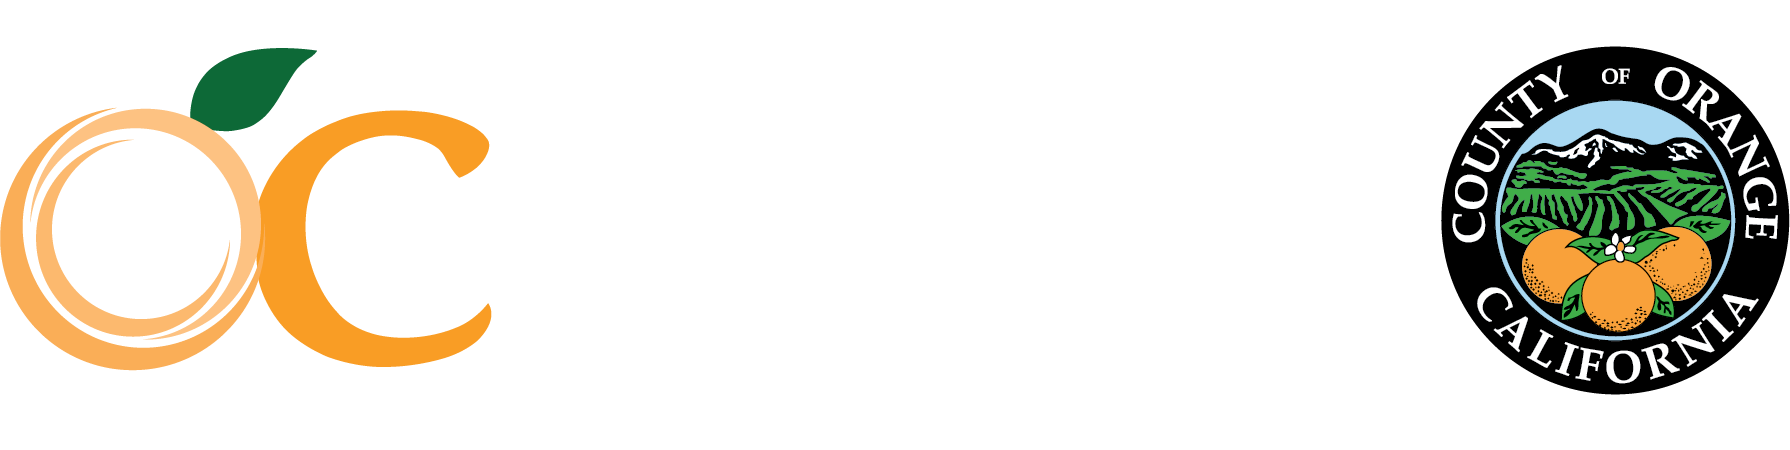 Orange County California - Health Care Agency Logo -- Home